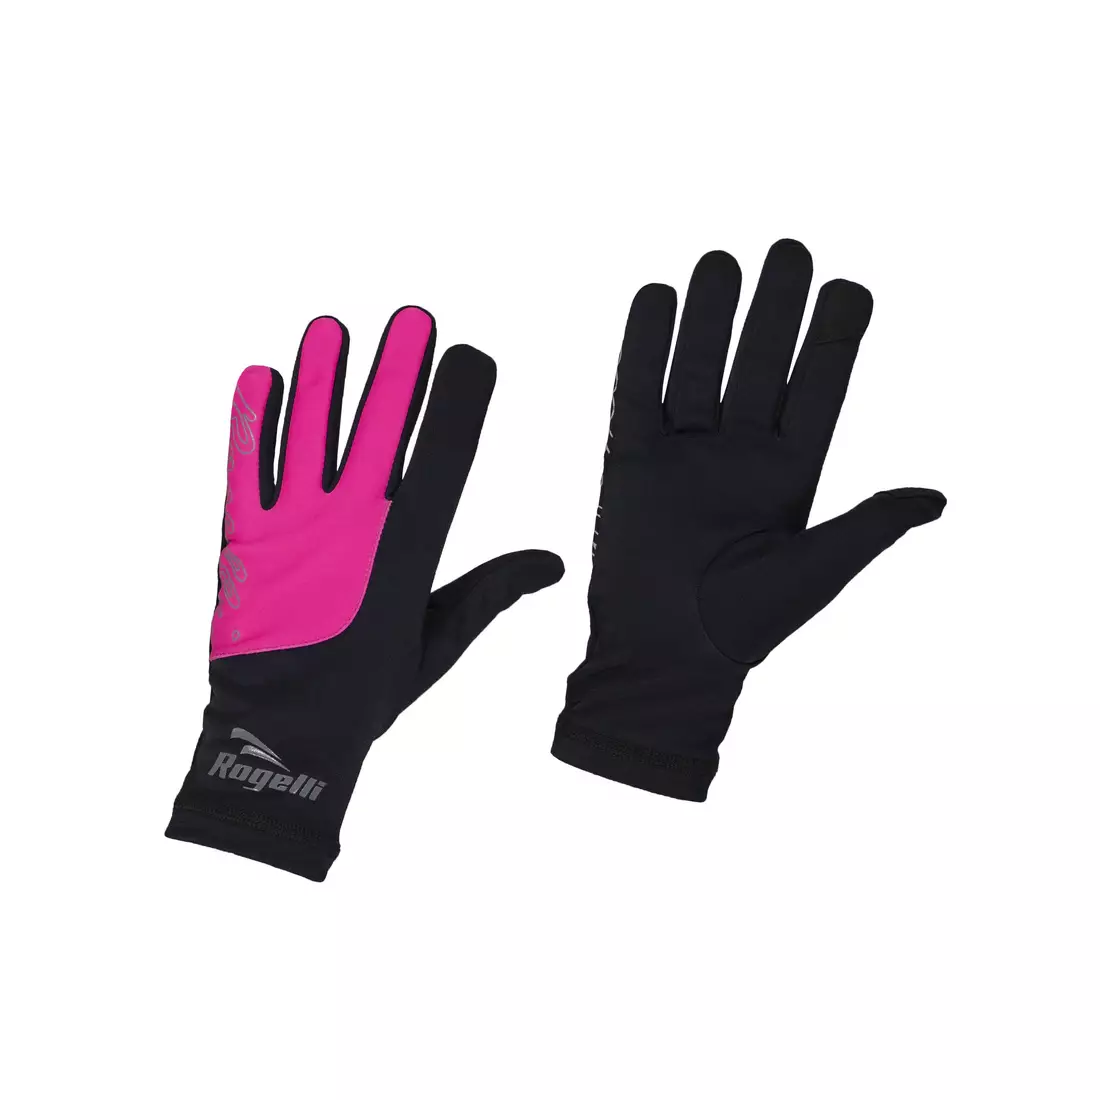 ROGELLI RUN 890.004 TOUCH Dámske bežecké rukavice, čierne a ružové